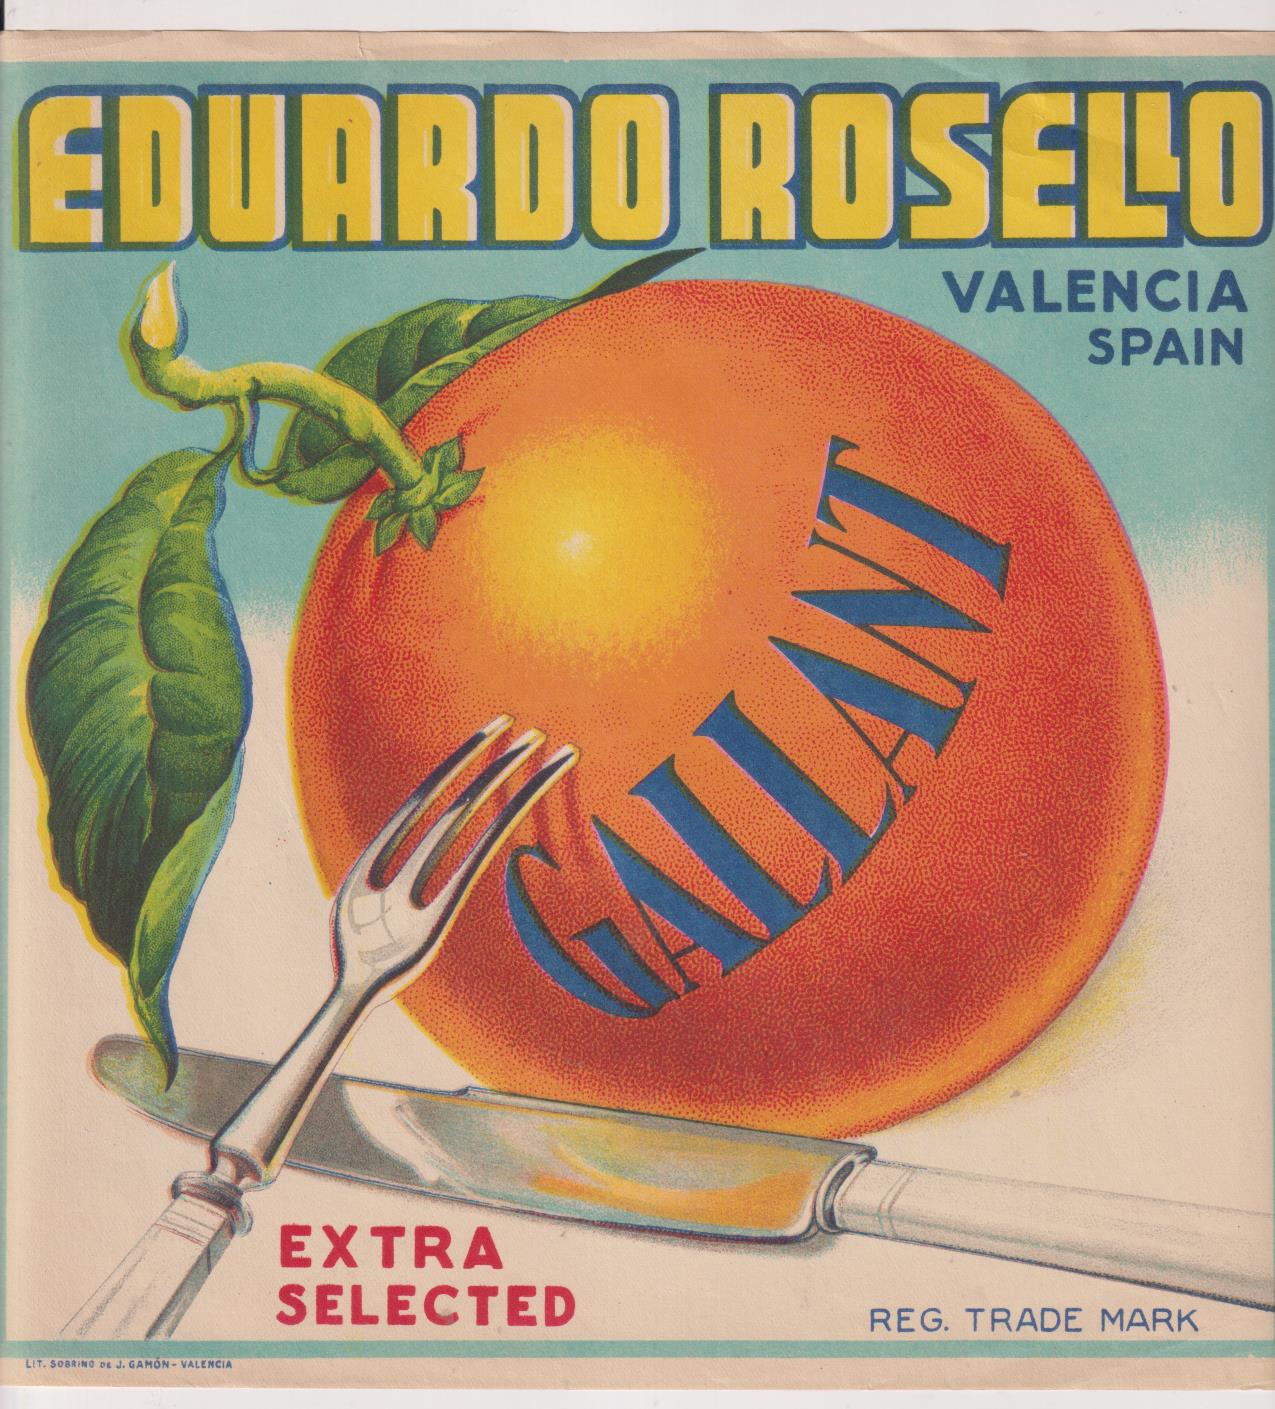 Publicidad (23x23 cm.) de naranjas. Eduardo Roselló, Valencia